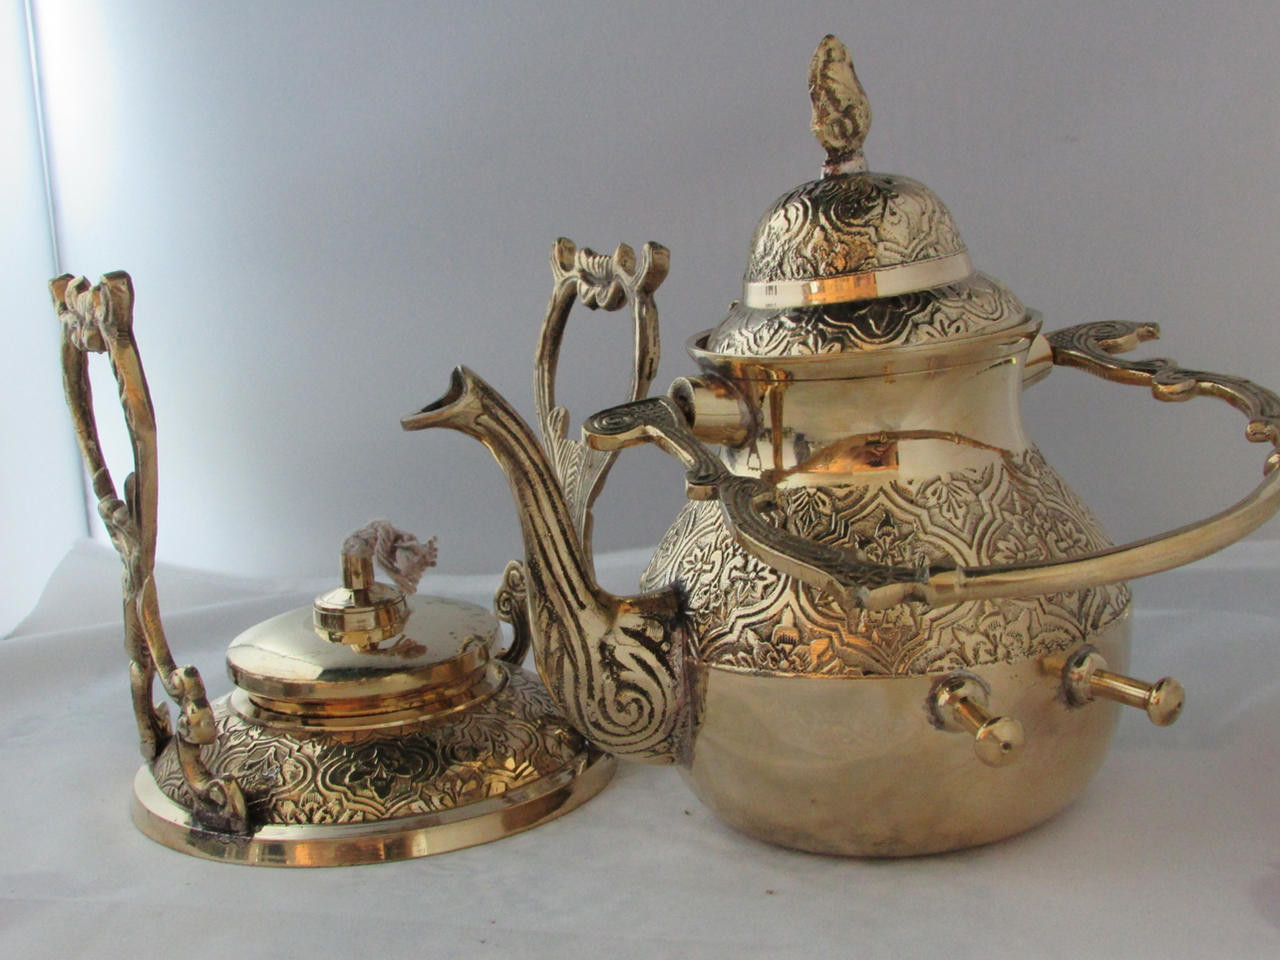 https://cdn11.bigcommerce.com/s-eaczr0f/images/stencil/1280x1280/products/2210/36865/vintage-brass-teapot-on-a-stand-teapot-warmer-beautiful-ornate-teapot-tea-kettle-on-stand-coffee-pot-coffee-kettle-on-stand-kitchen__10522.1640764525.jpg?c=2?imbypass=on